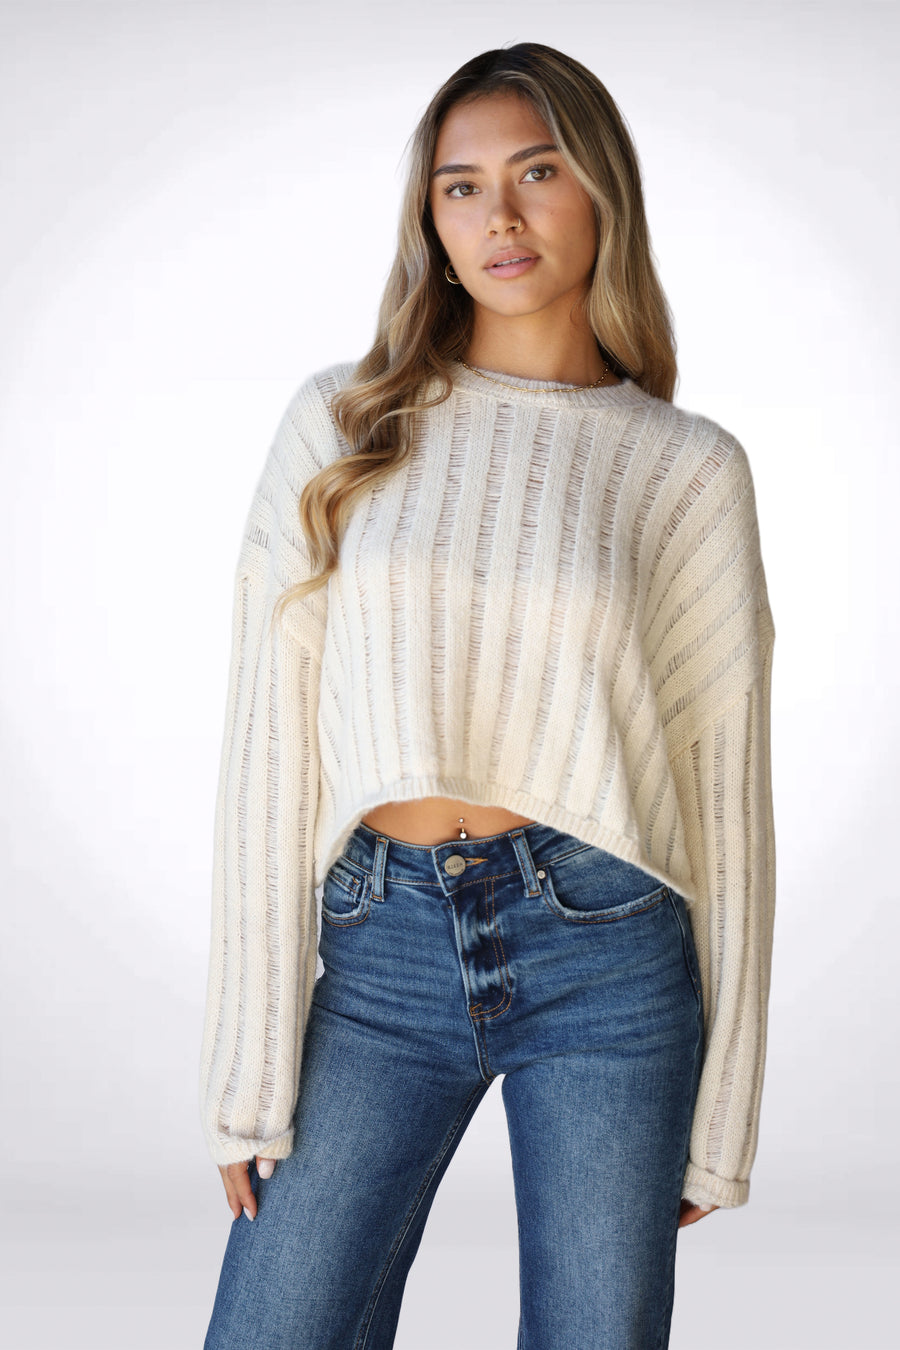 Cream sheer knitted sweater. 